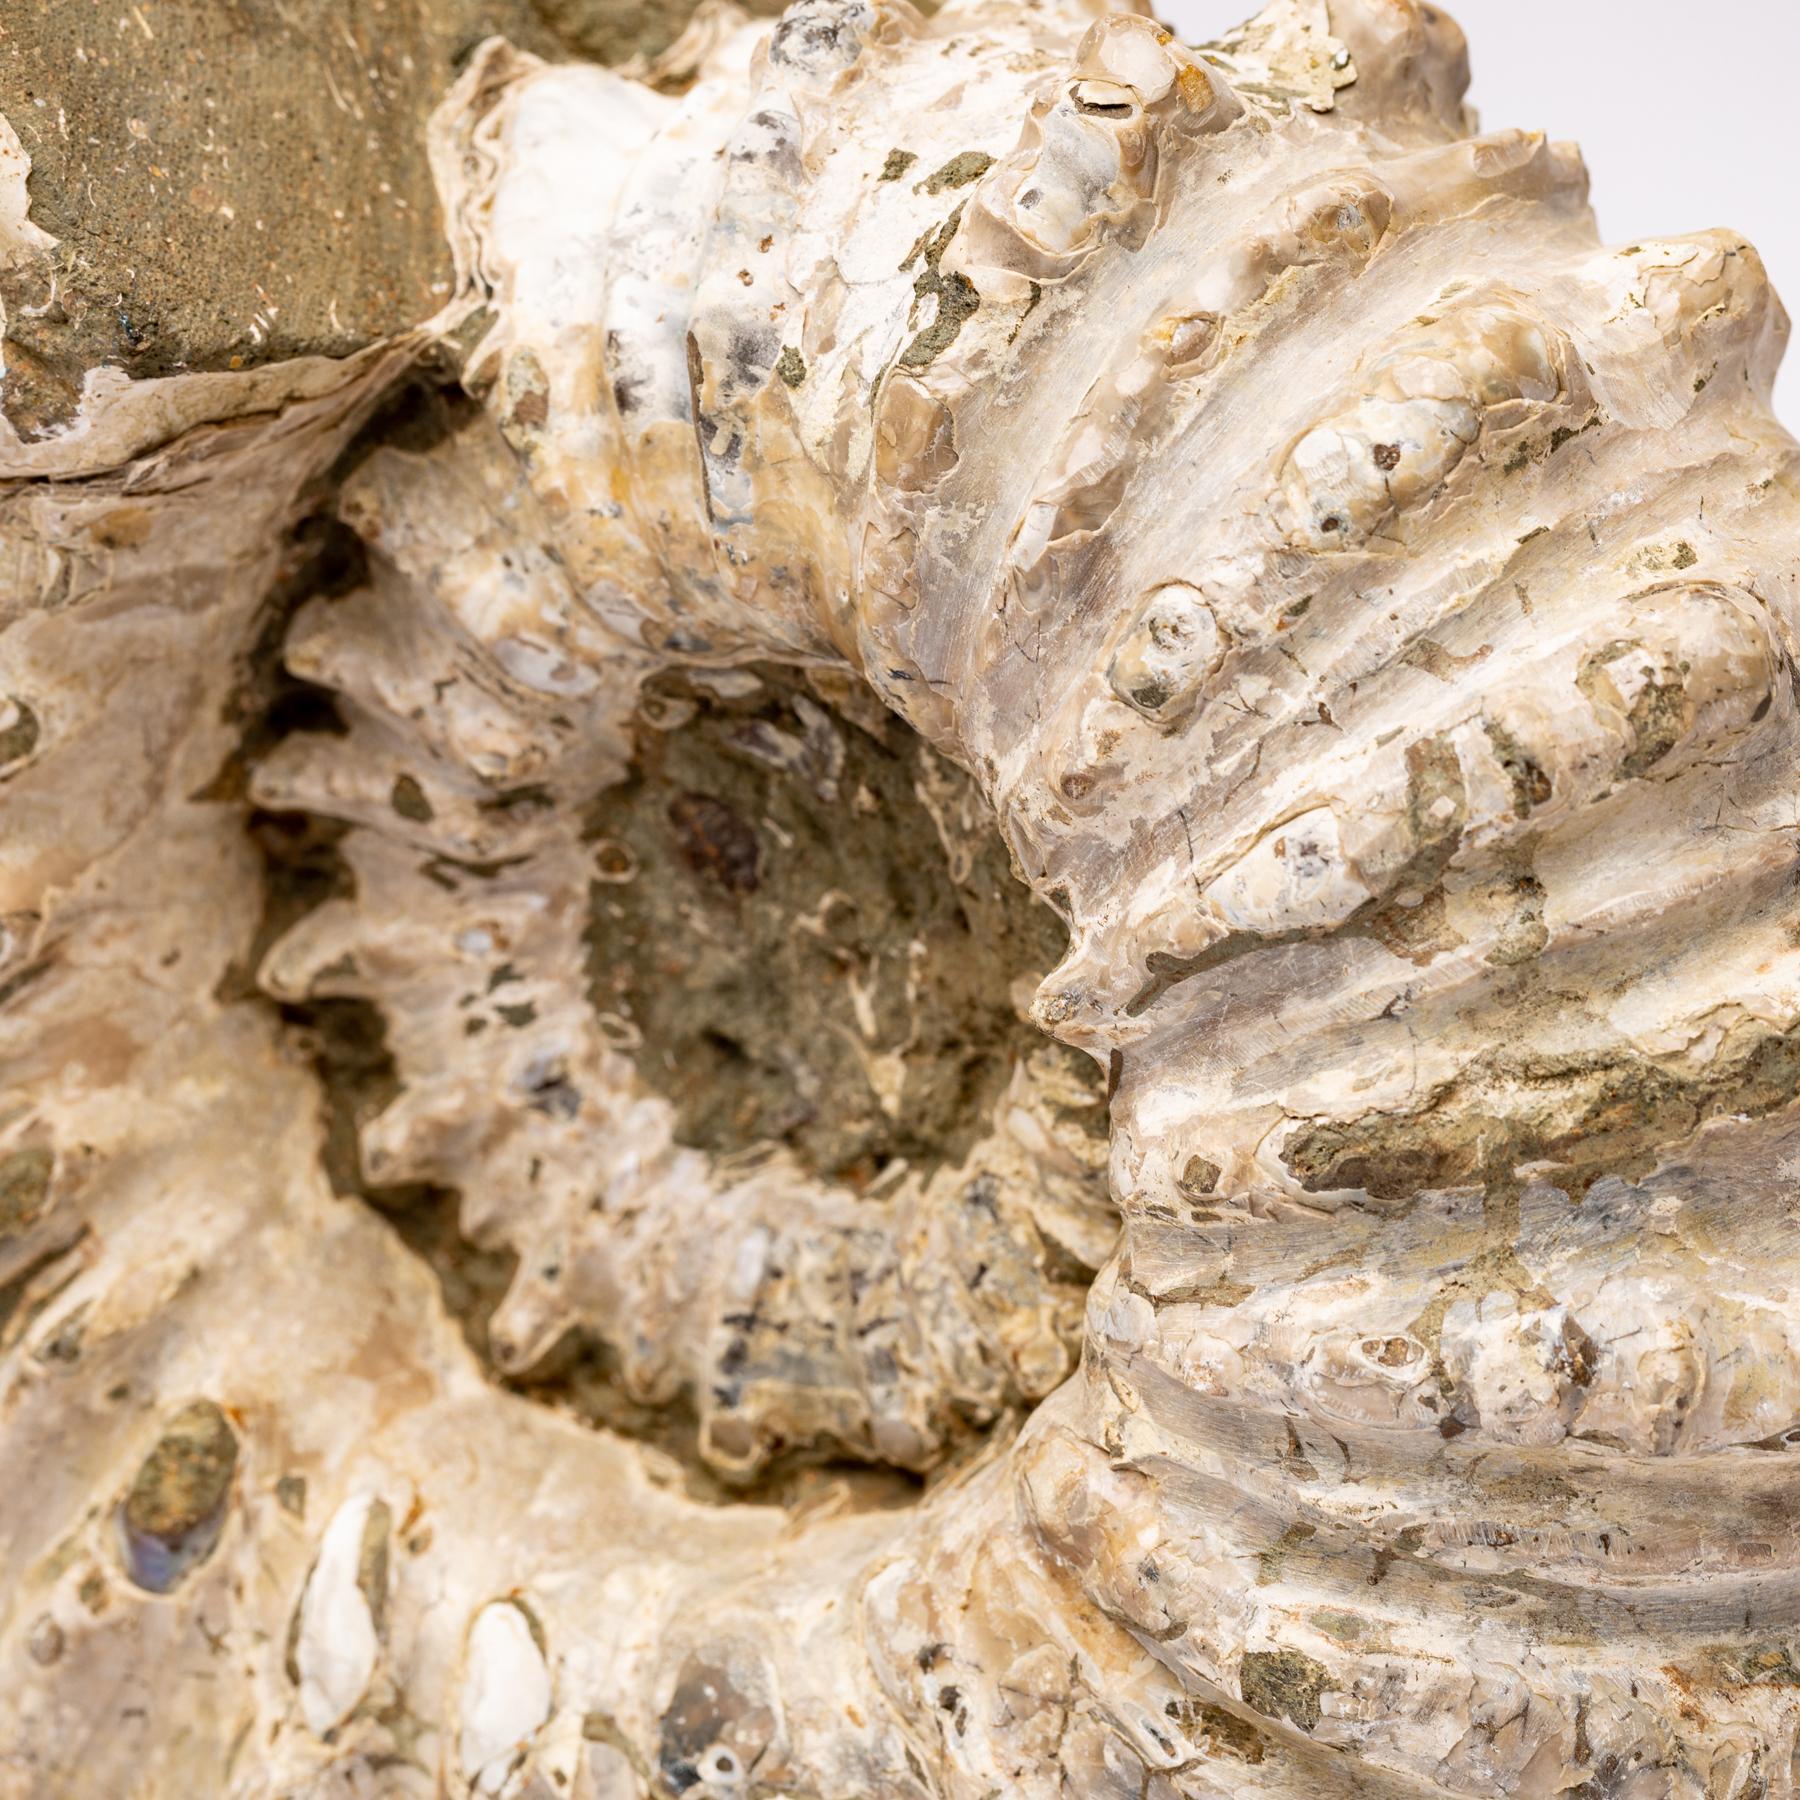 Madagascar Douvilleiceras Ammonite Fossil on Acrylic Base, Cretaceous Period 3